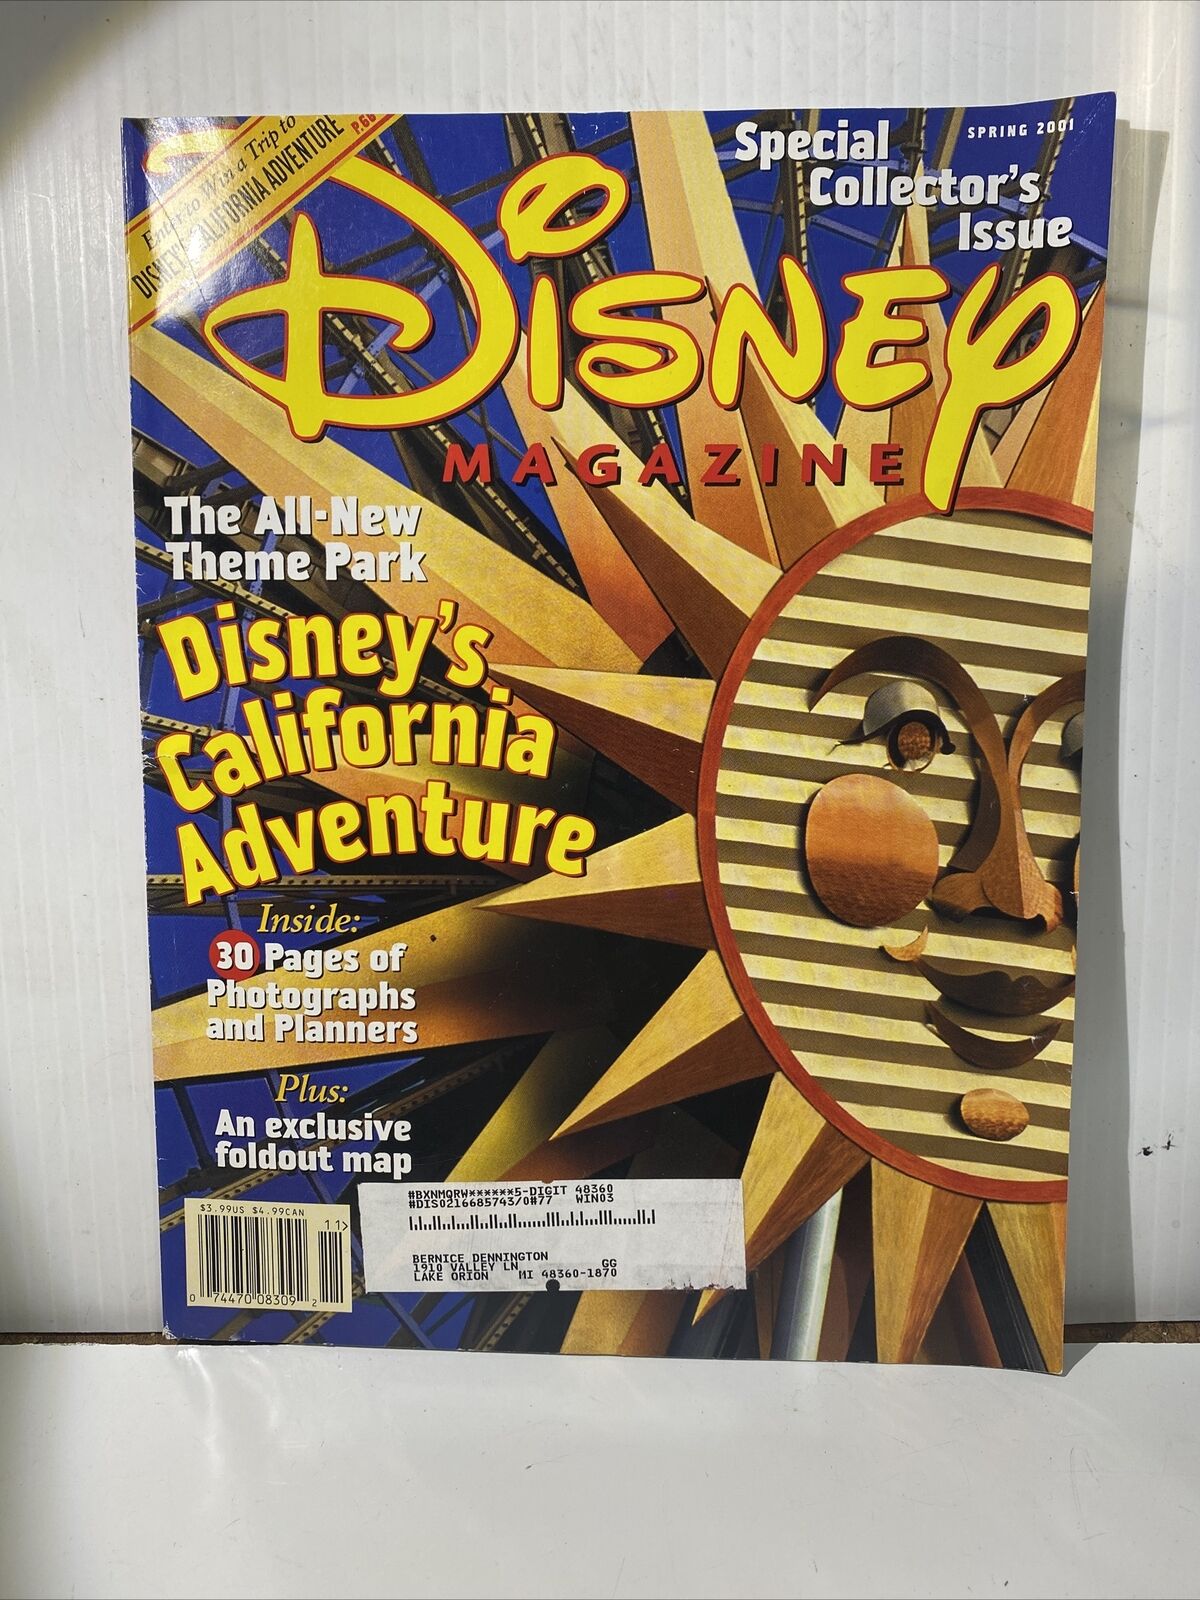 Disney Magazine Spring 2001 Collectors Issue Opening Disney California Adventure